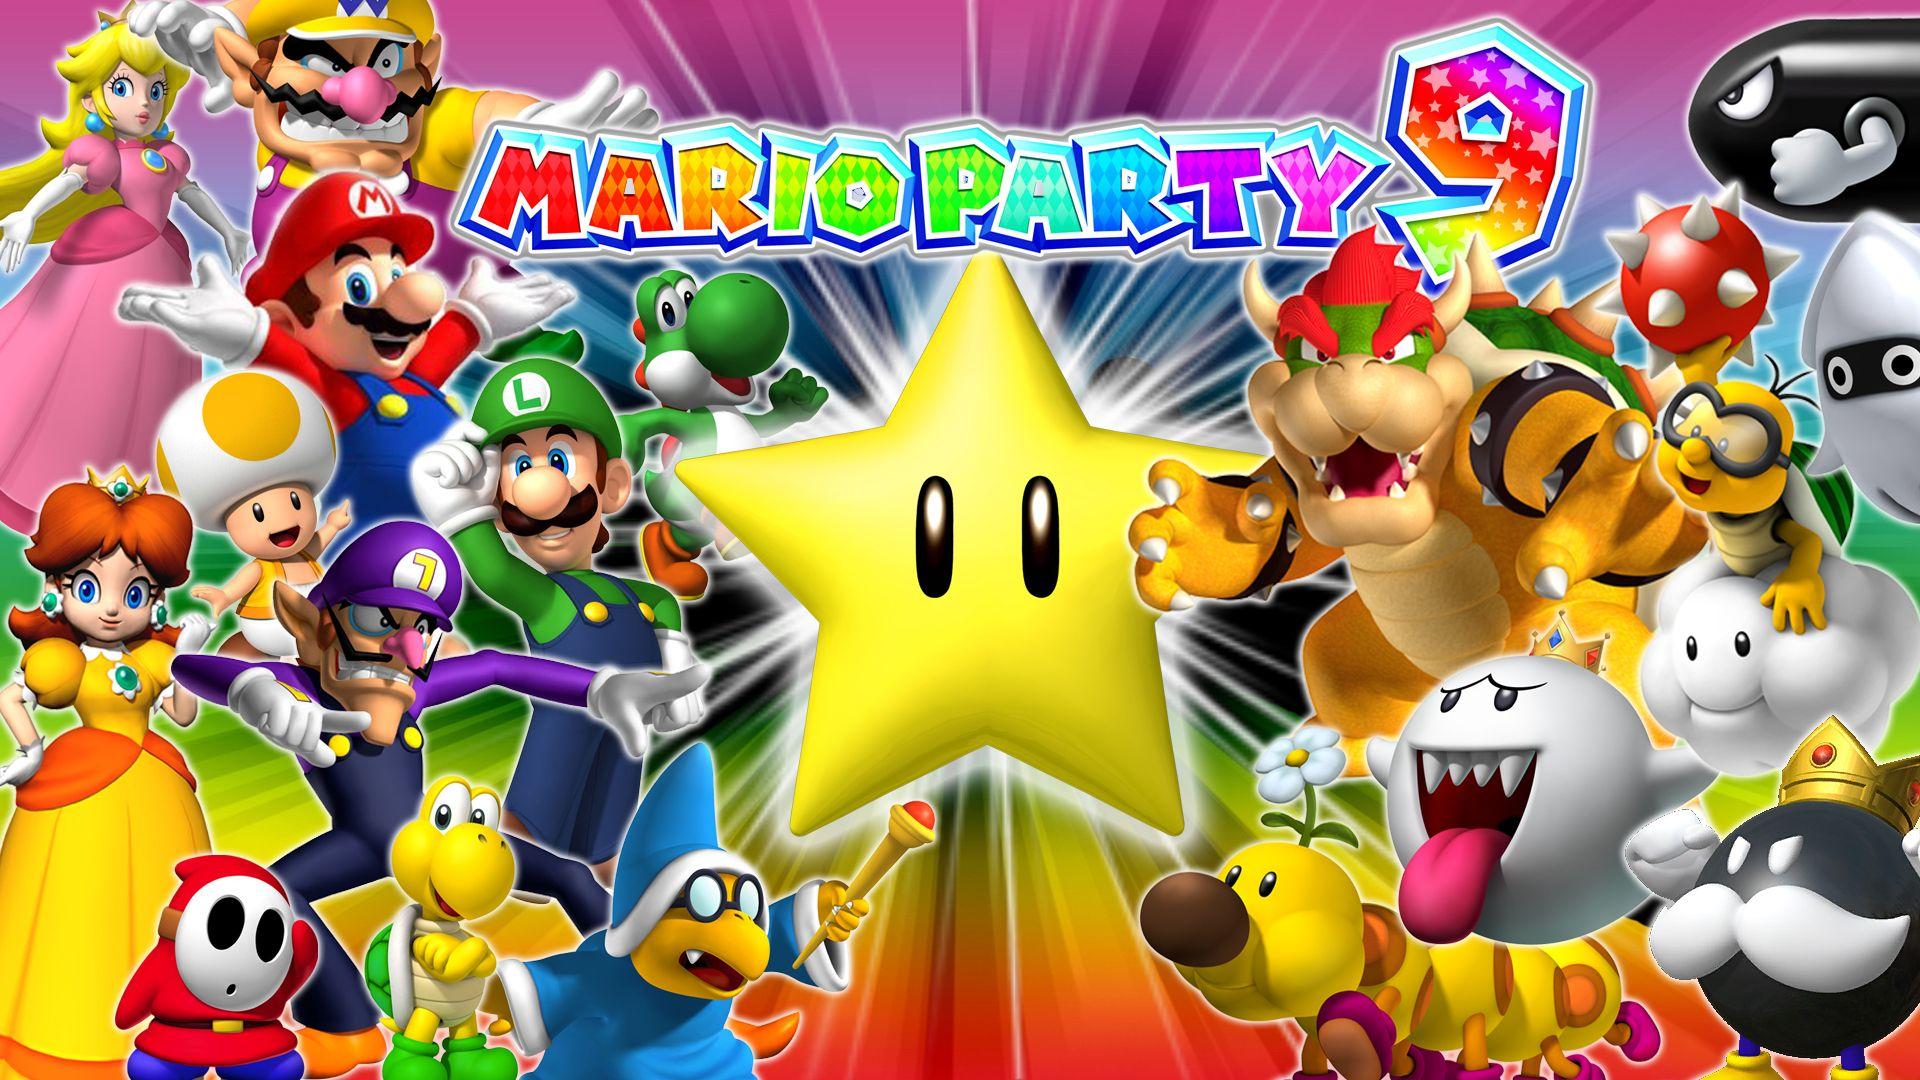 The Mario Party